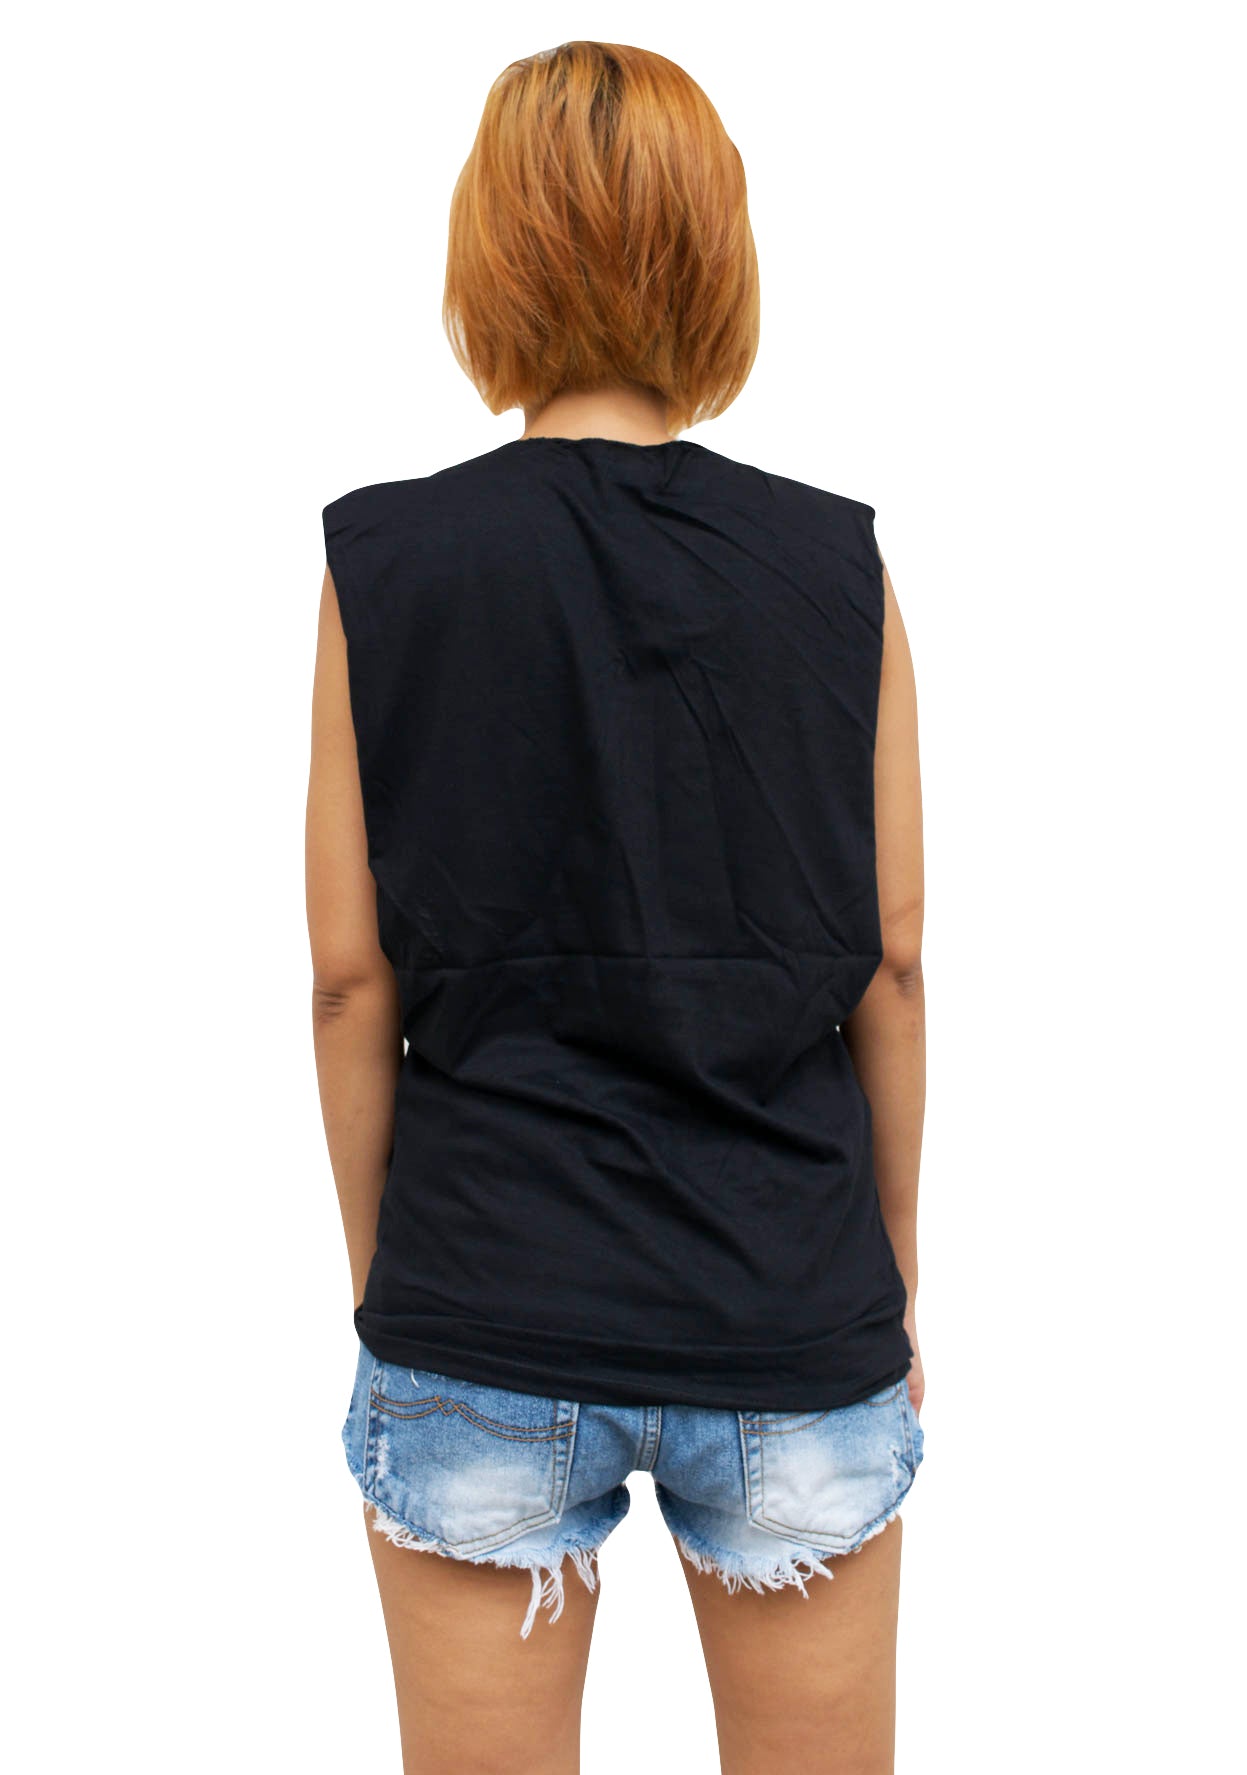 Ladies Papa Roach Vest Tank-Top Singlet Sleeveless T-Shirt